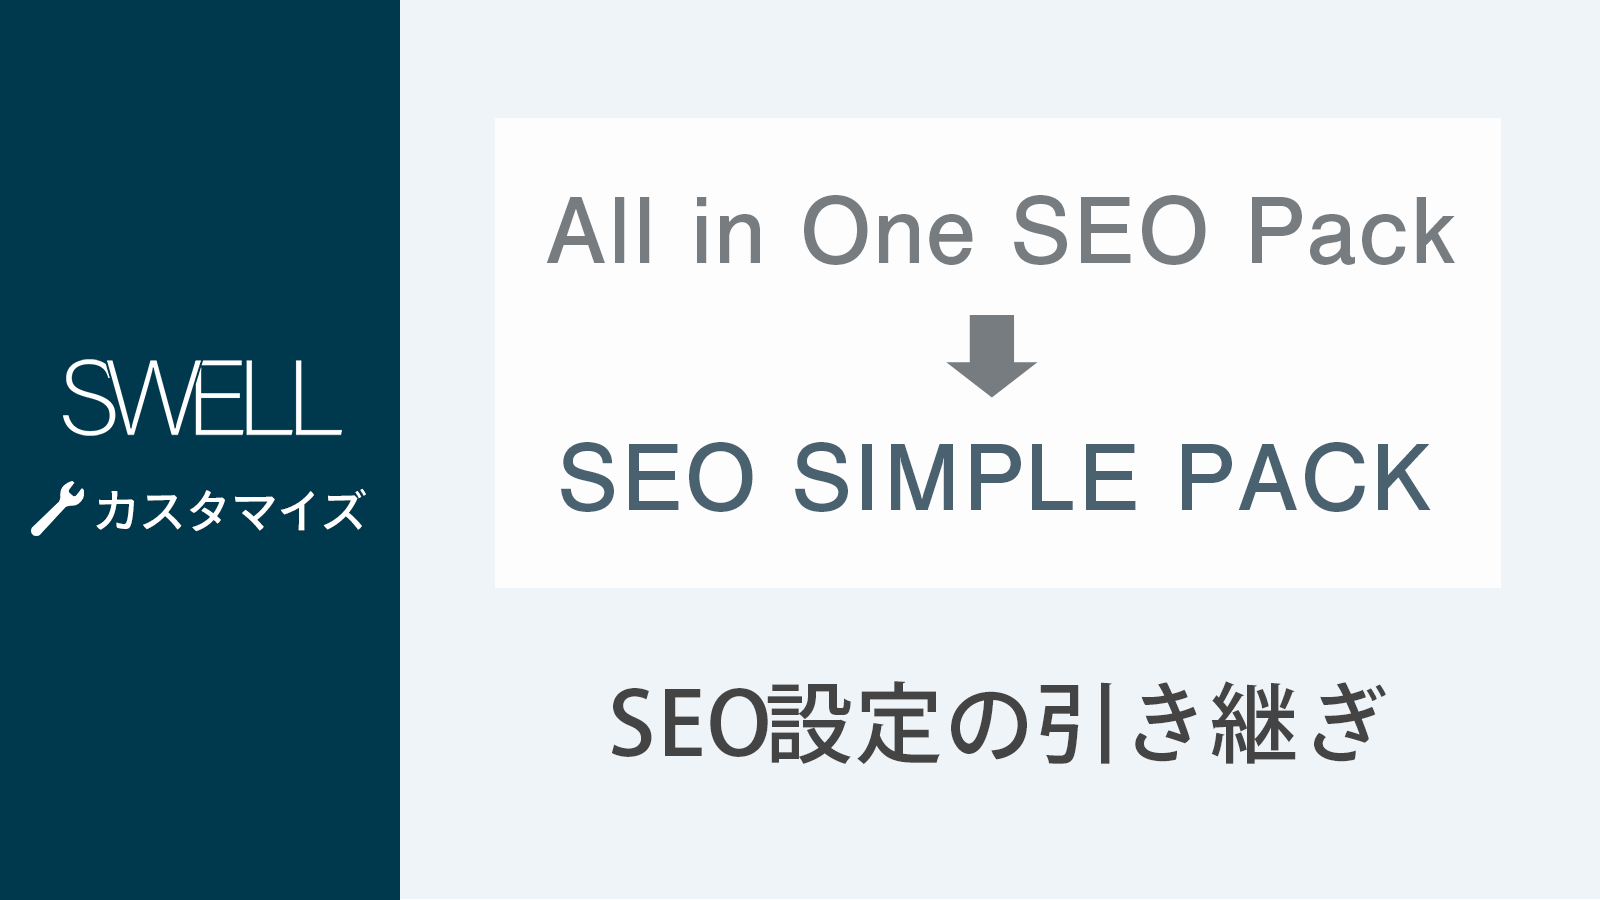 「All in One SEO Pack」の各記事の設定を引き継いで「SEO SIMPLE PACK」へ乗り換える方法 | WordPressテー...